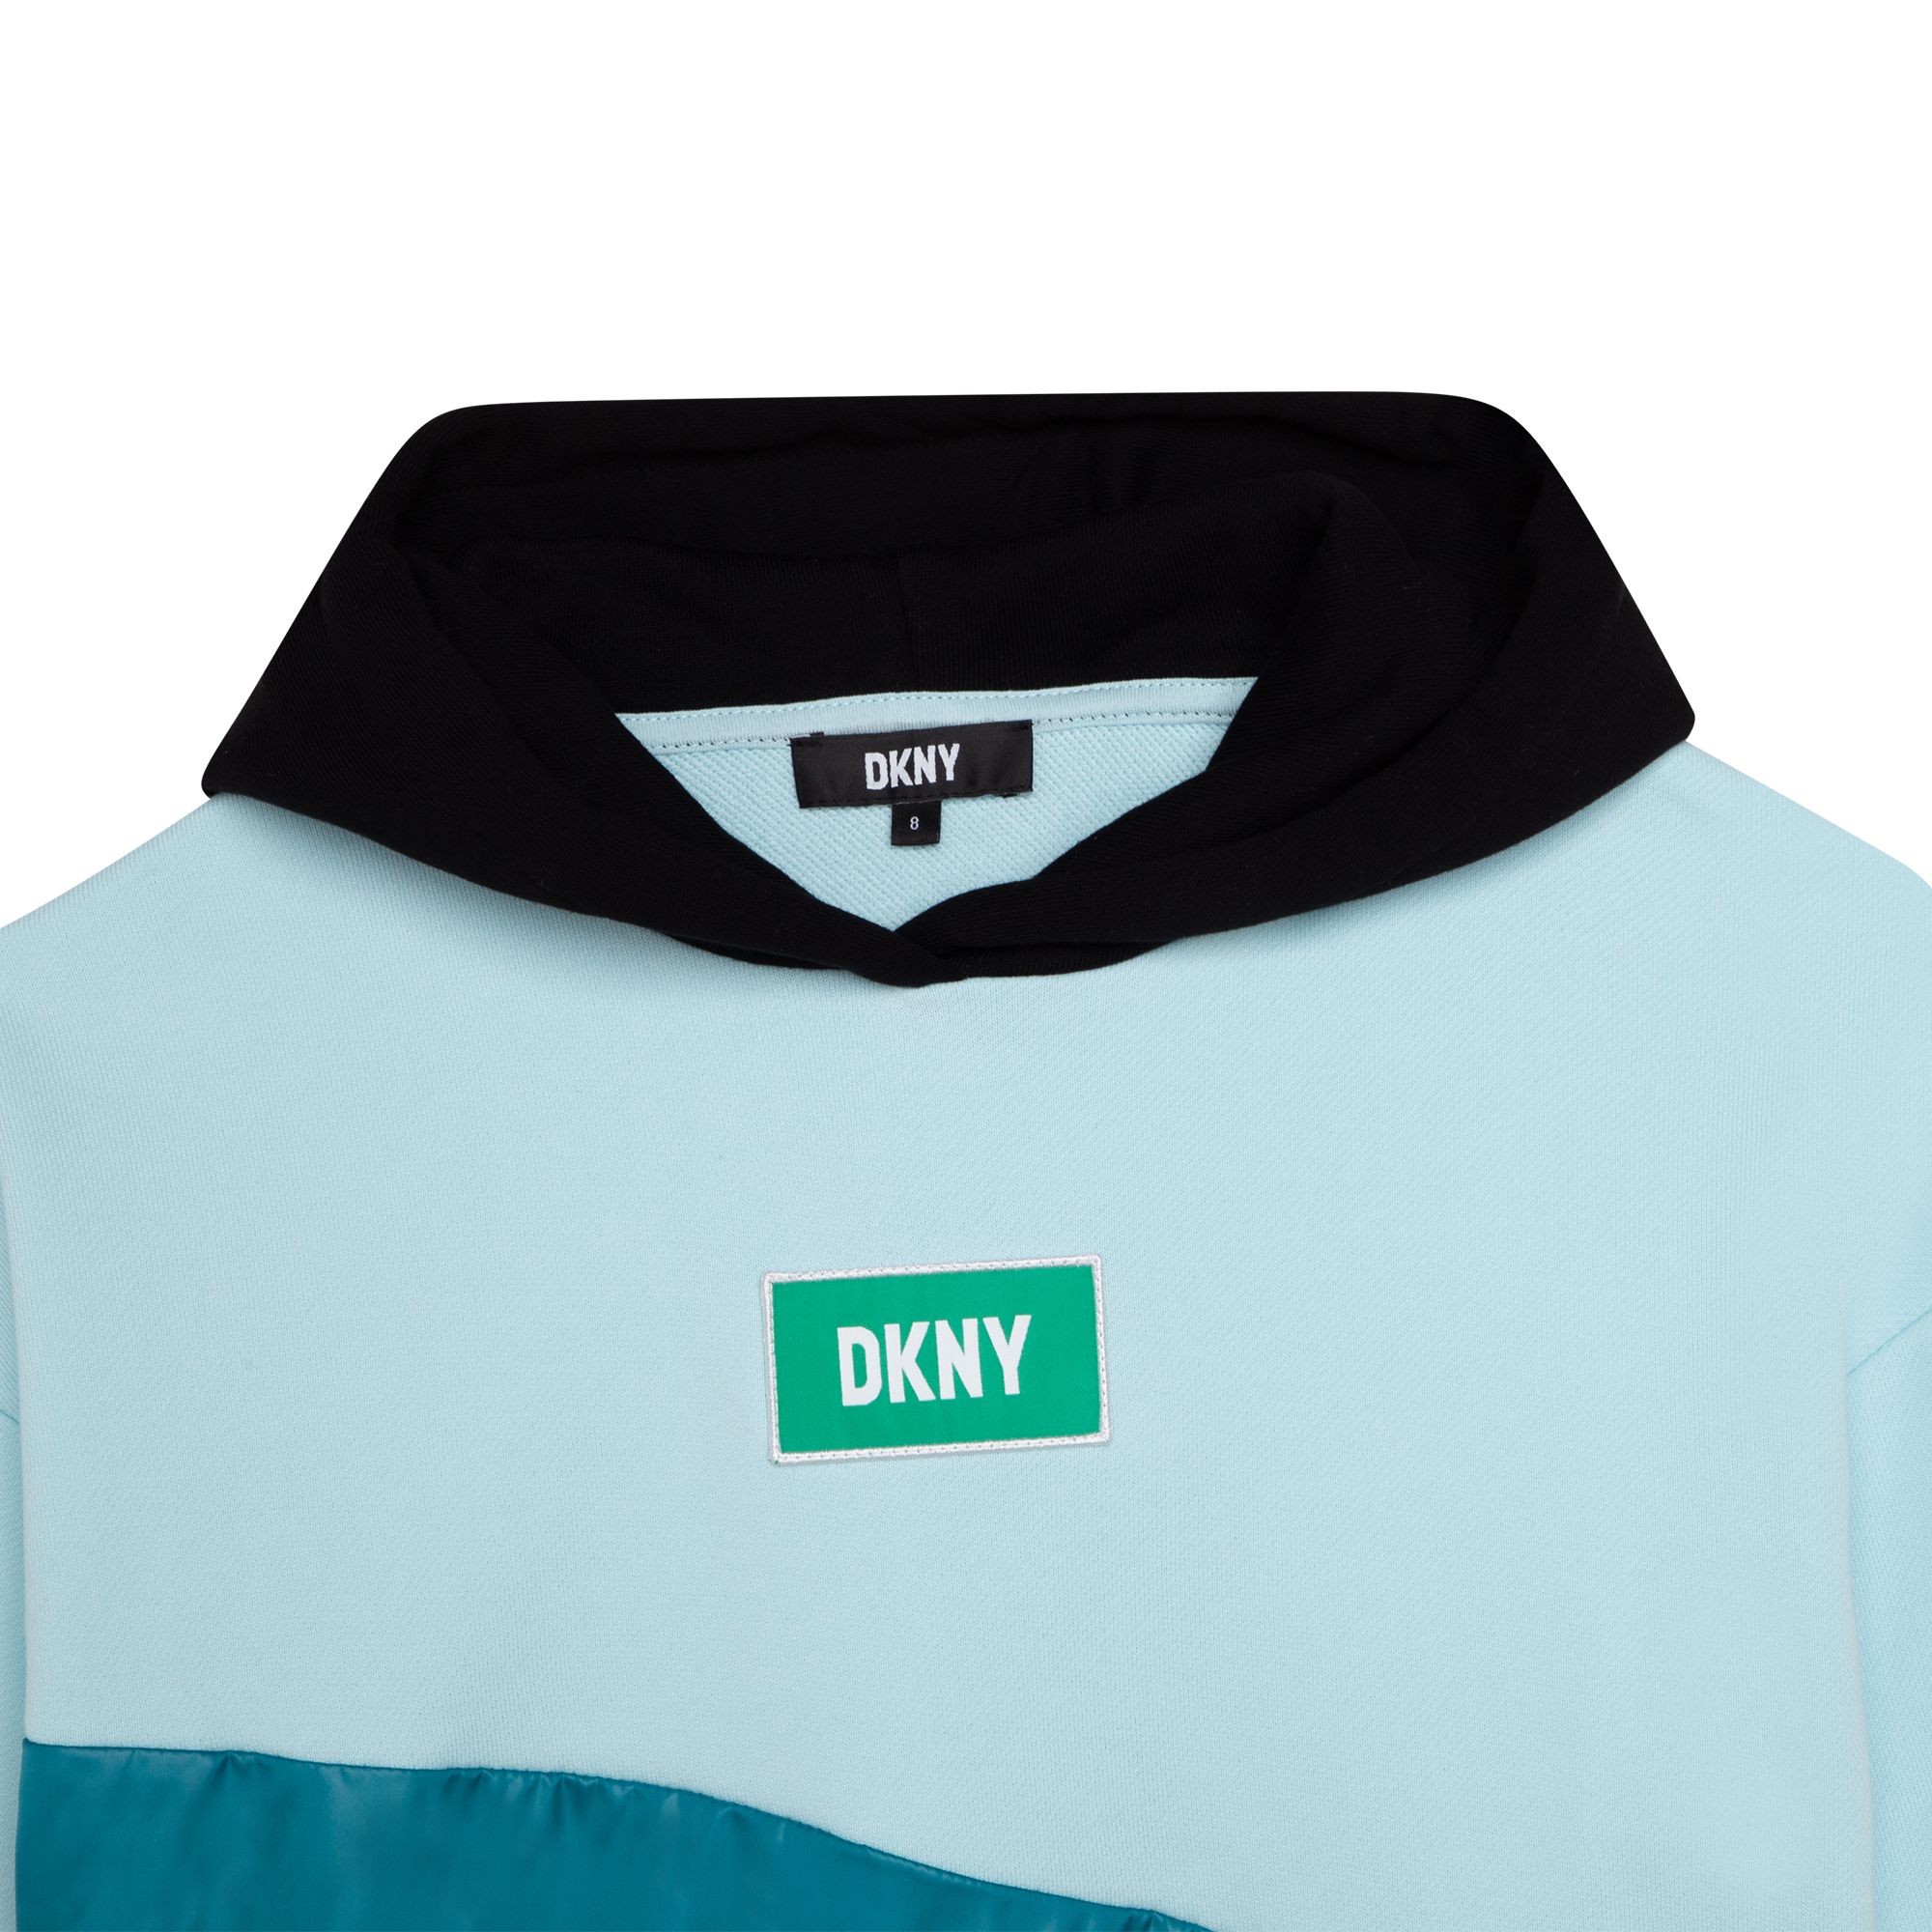 Hooded bi-material sweatshirt DKNY for GIRL